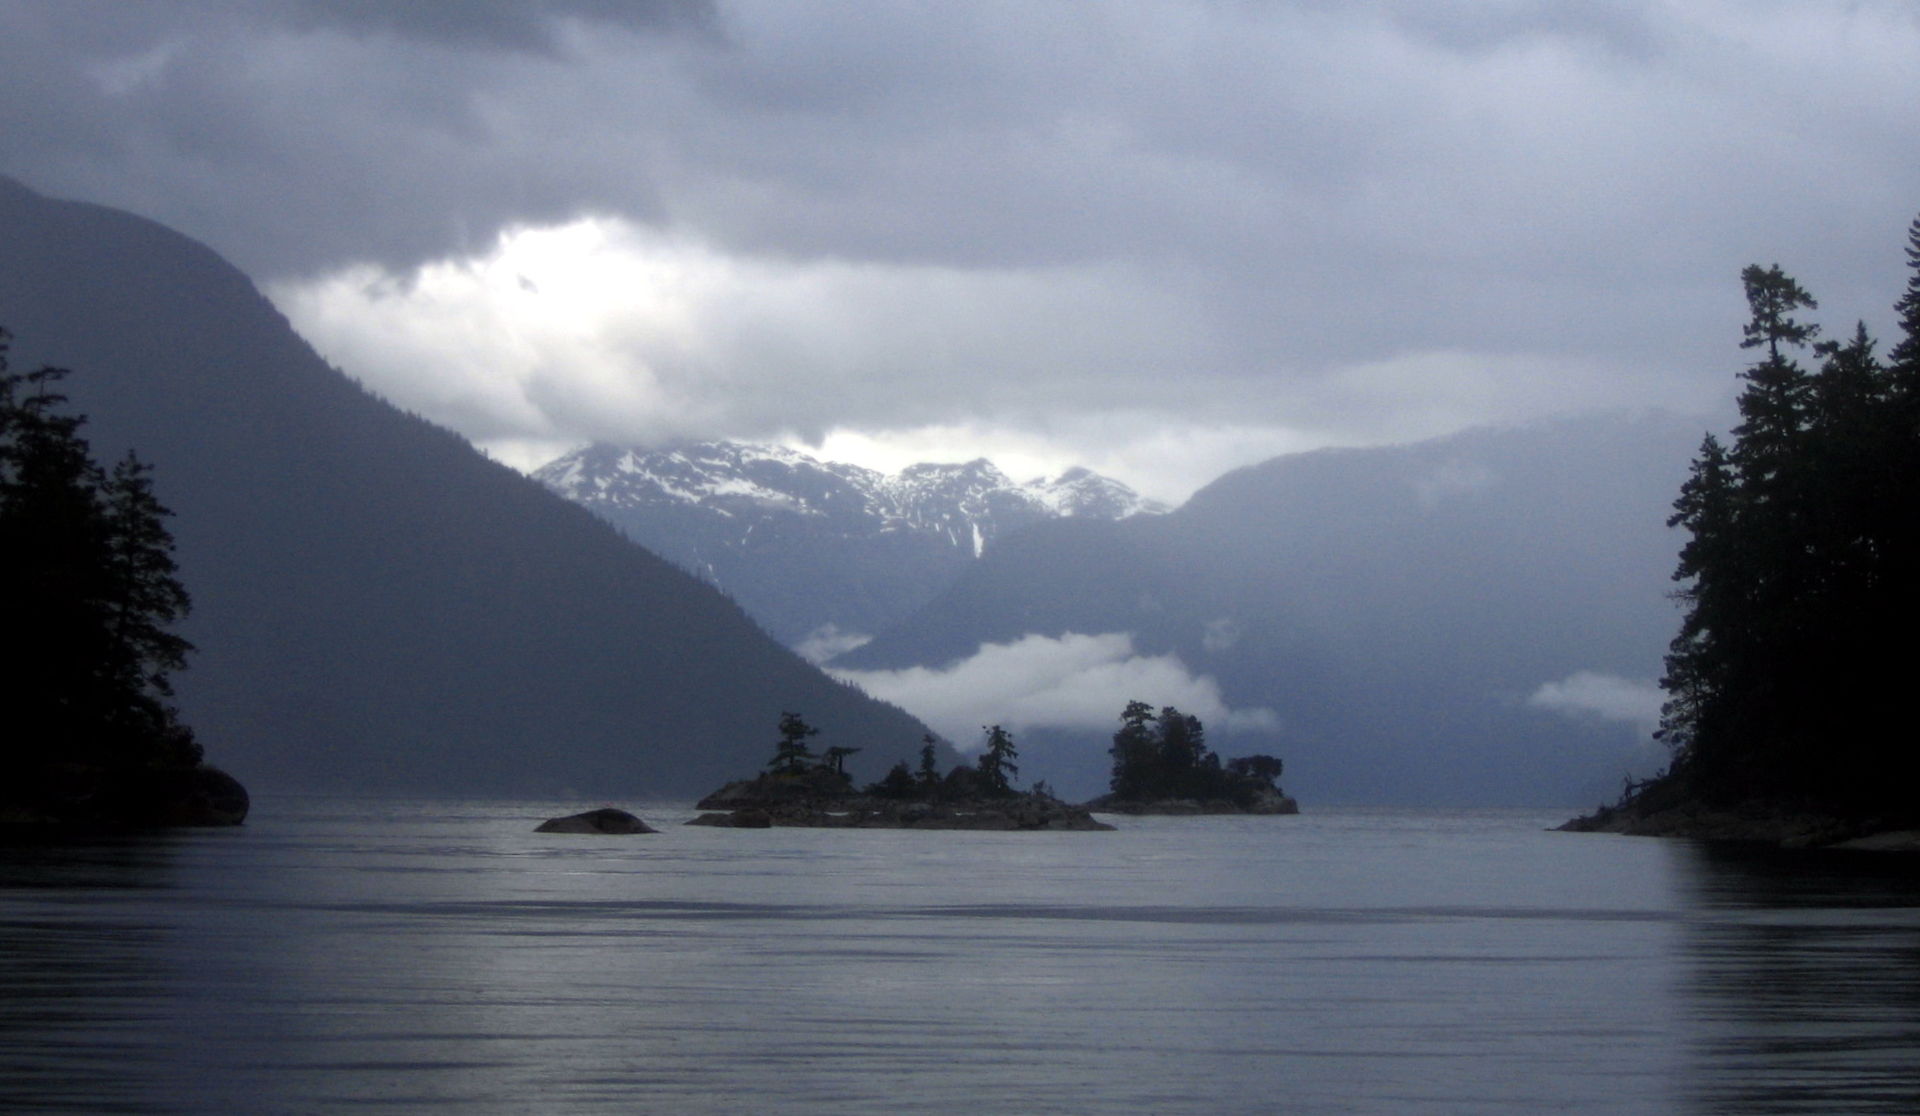 Desolation Sound in the Pacific Northwest